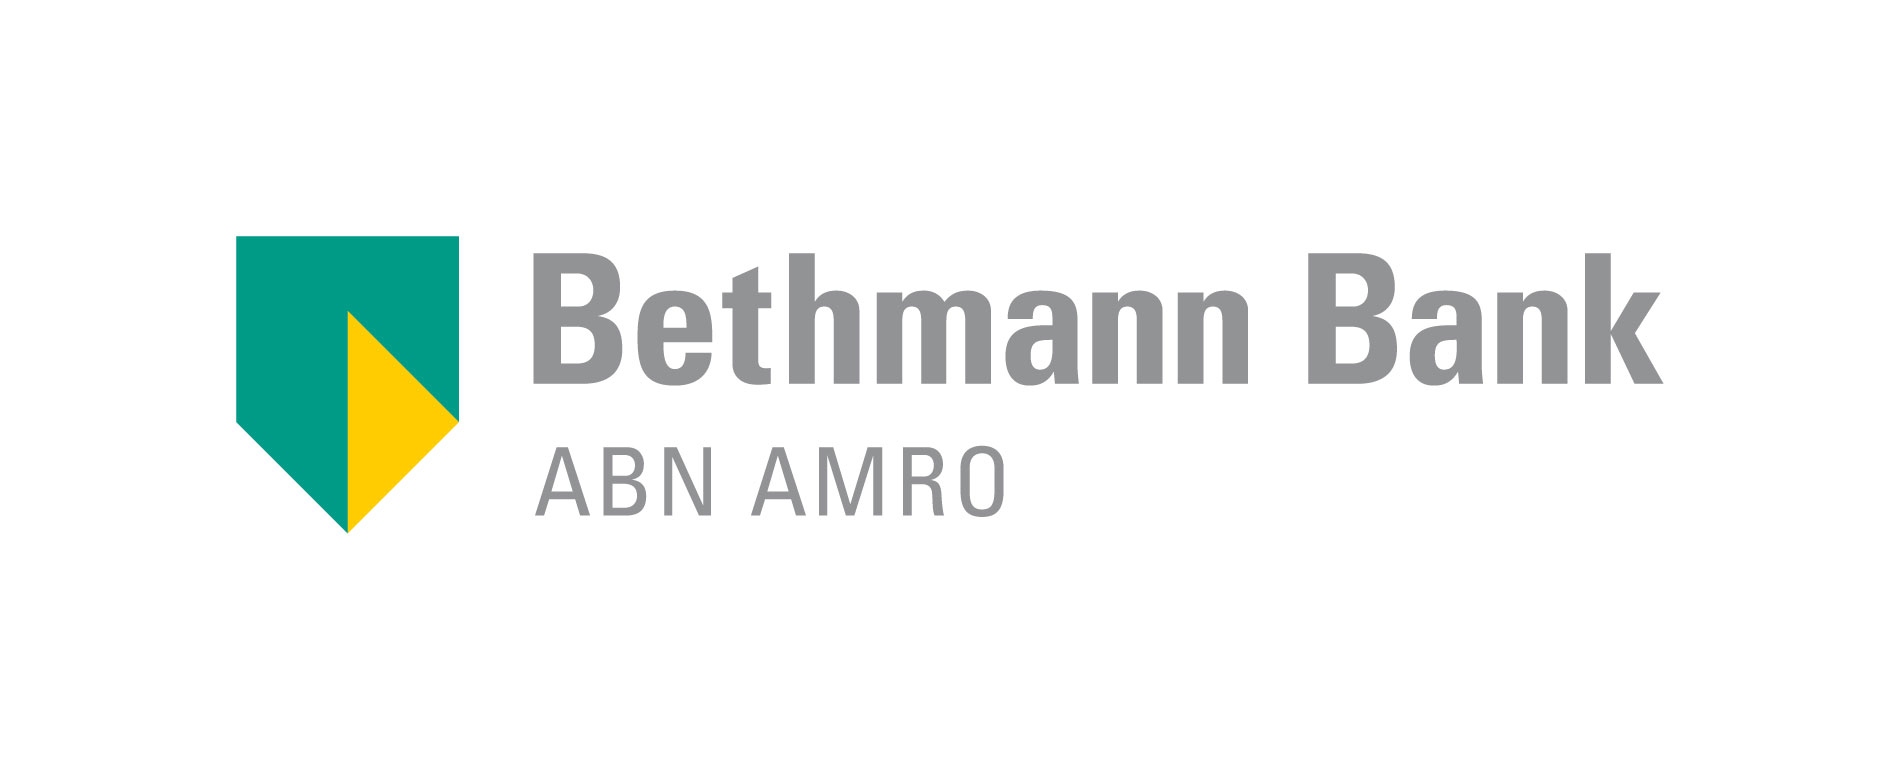 Foundation member Bethmann Bank